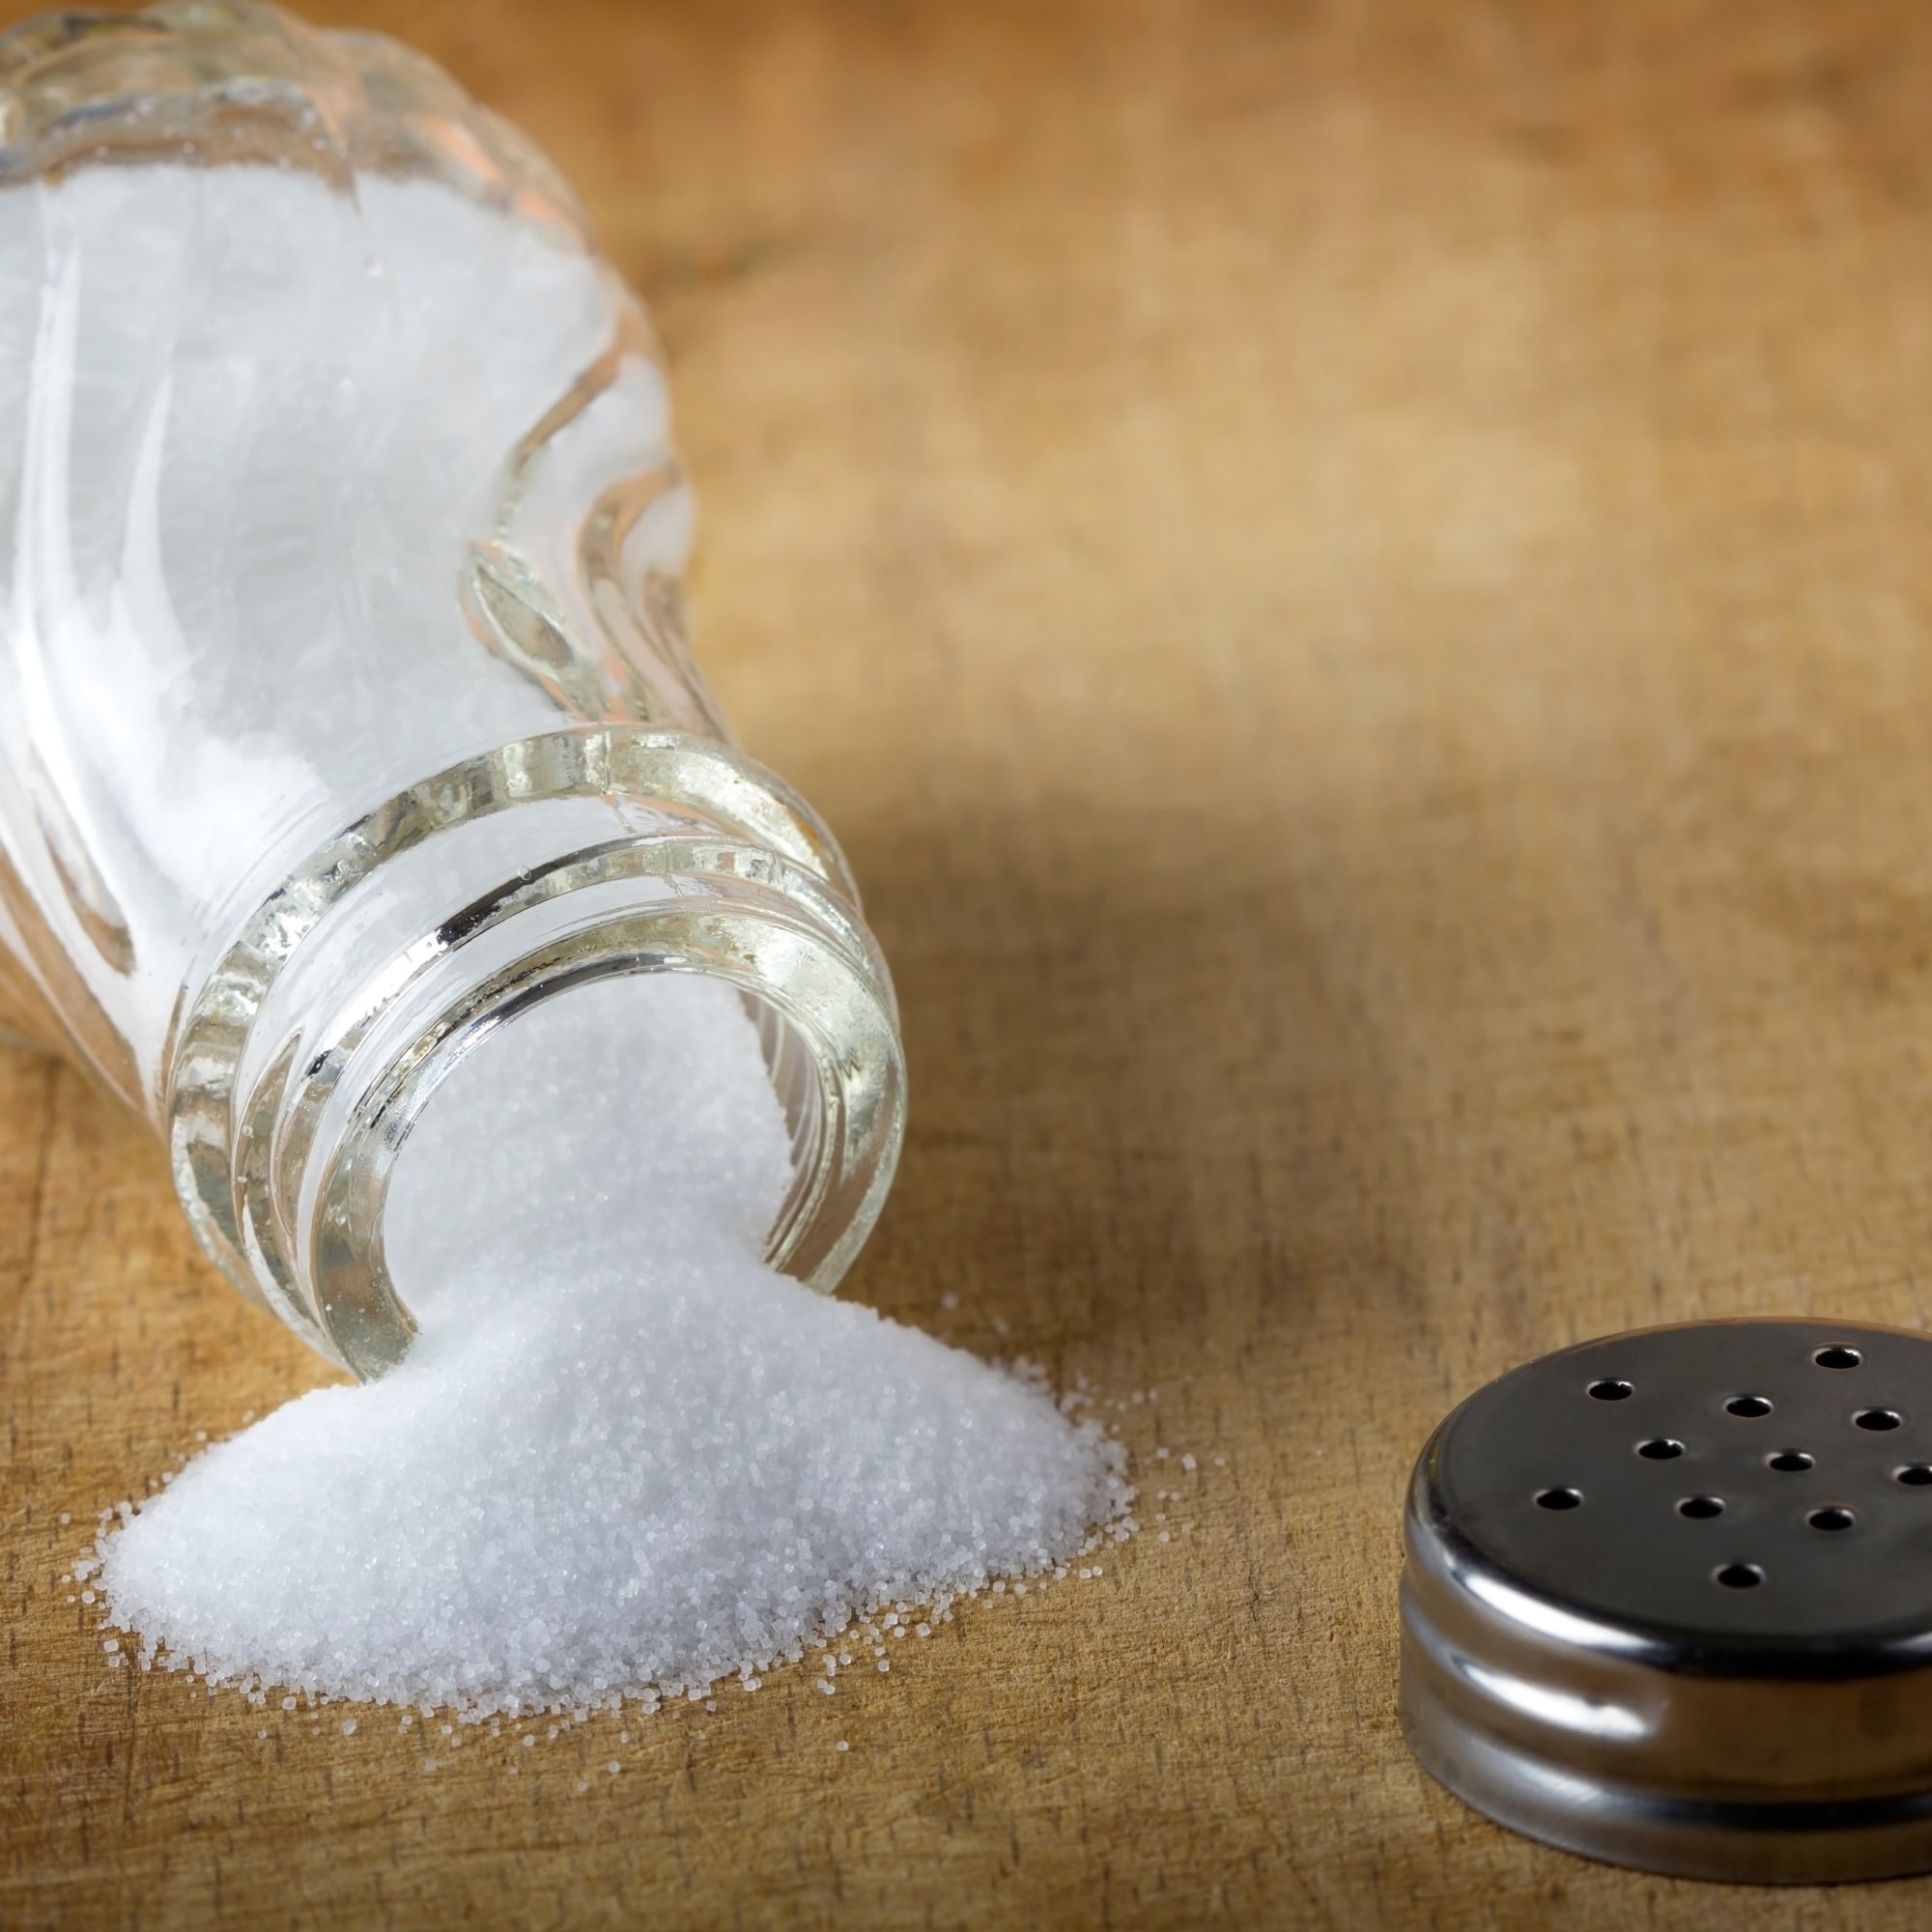 a salt shaker and salt on a wooden table